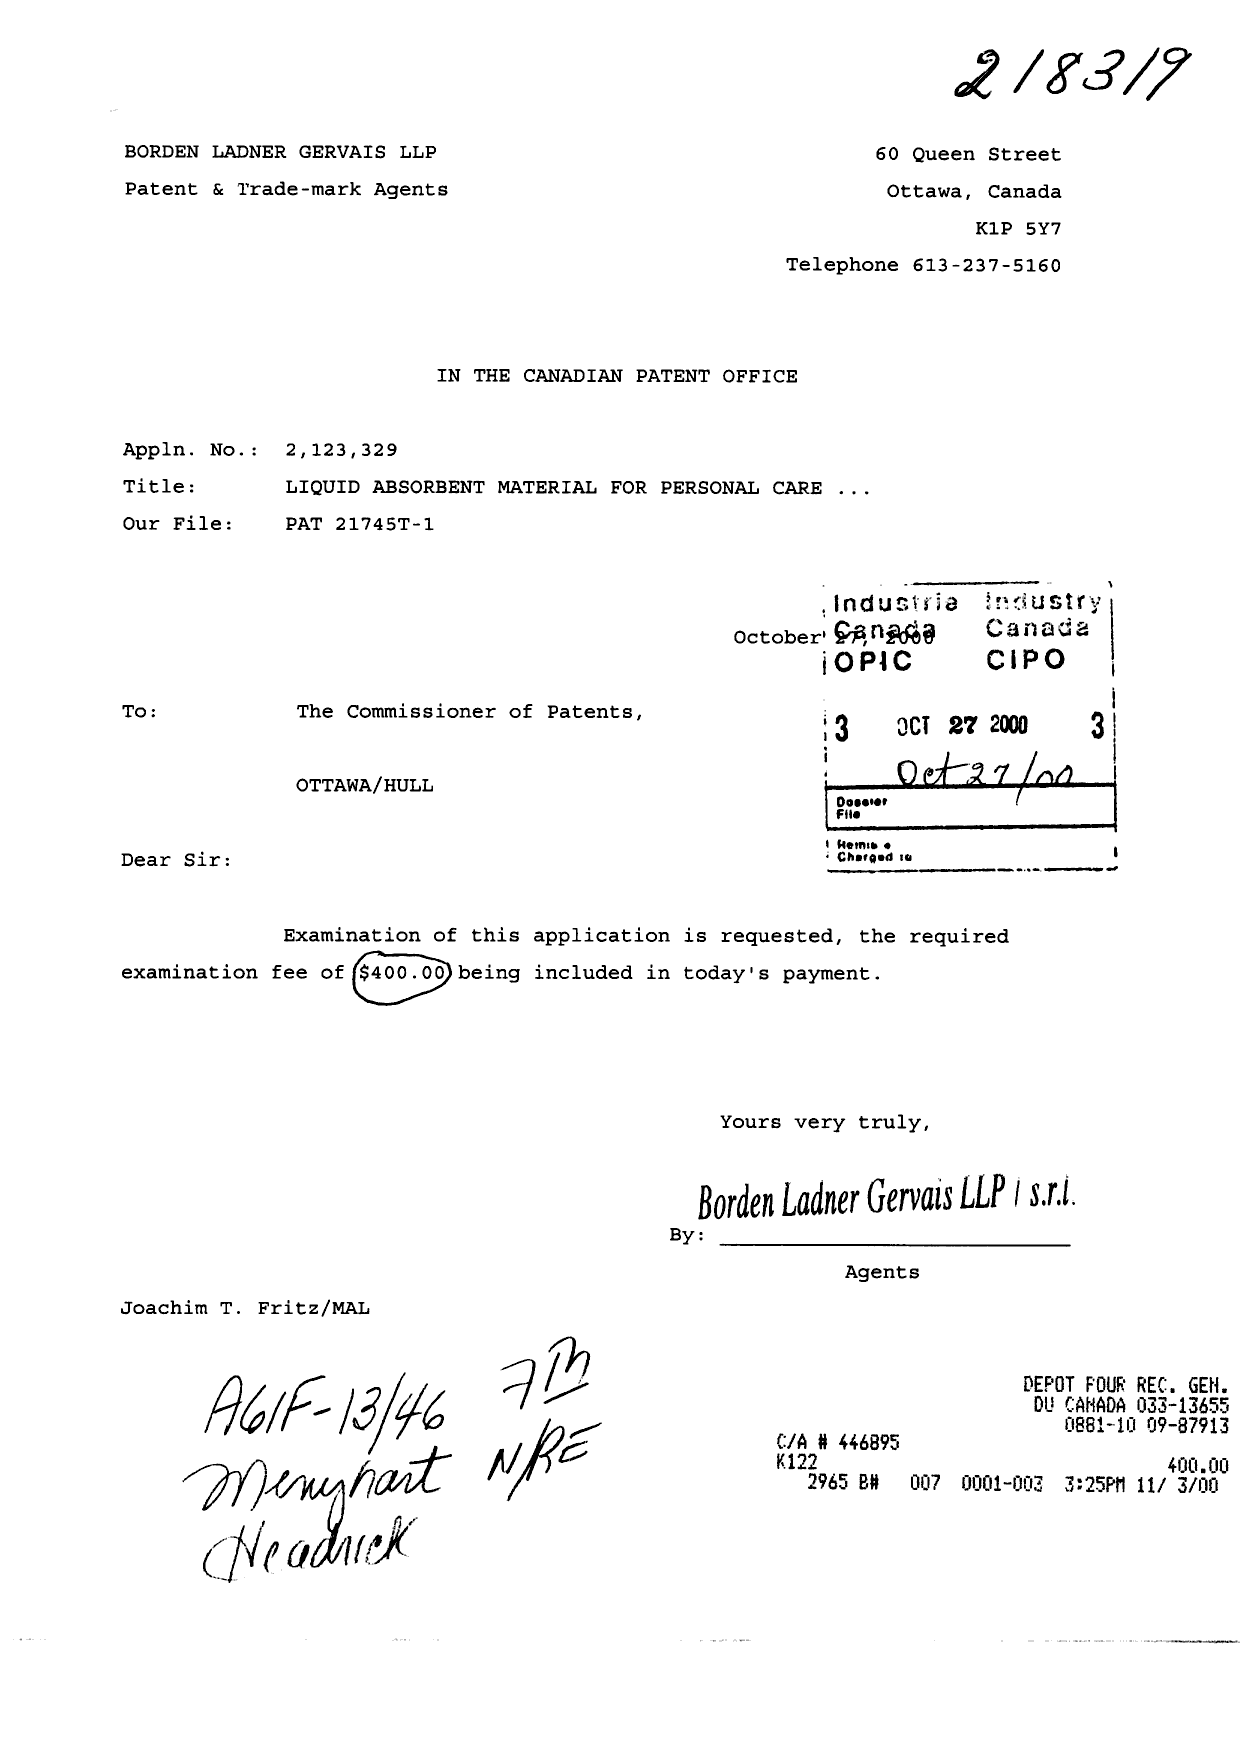 Canadian Patent Document 2123329. Prosecution-Amendment 20001027. Image 1 of 1